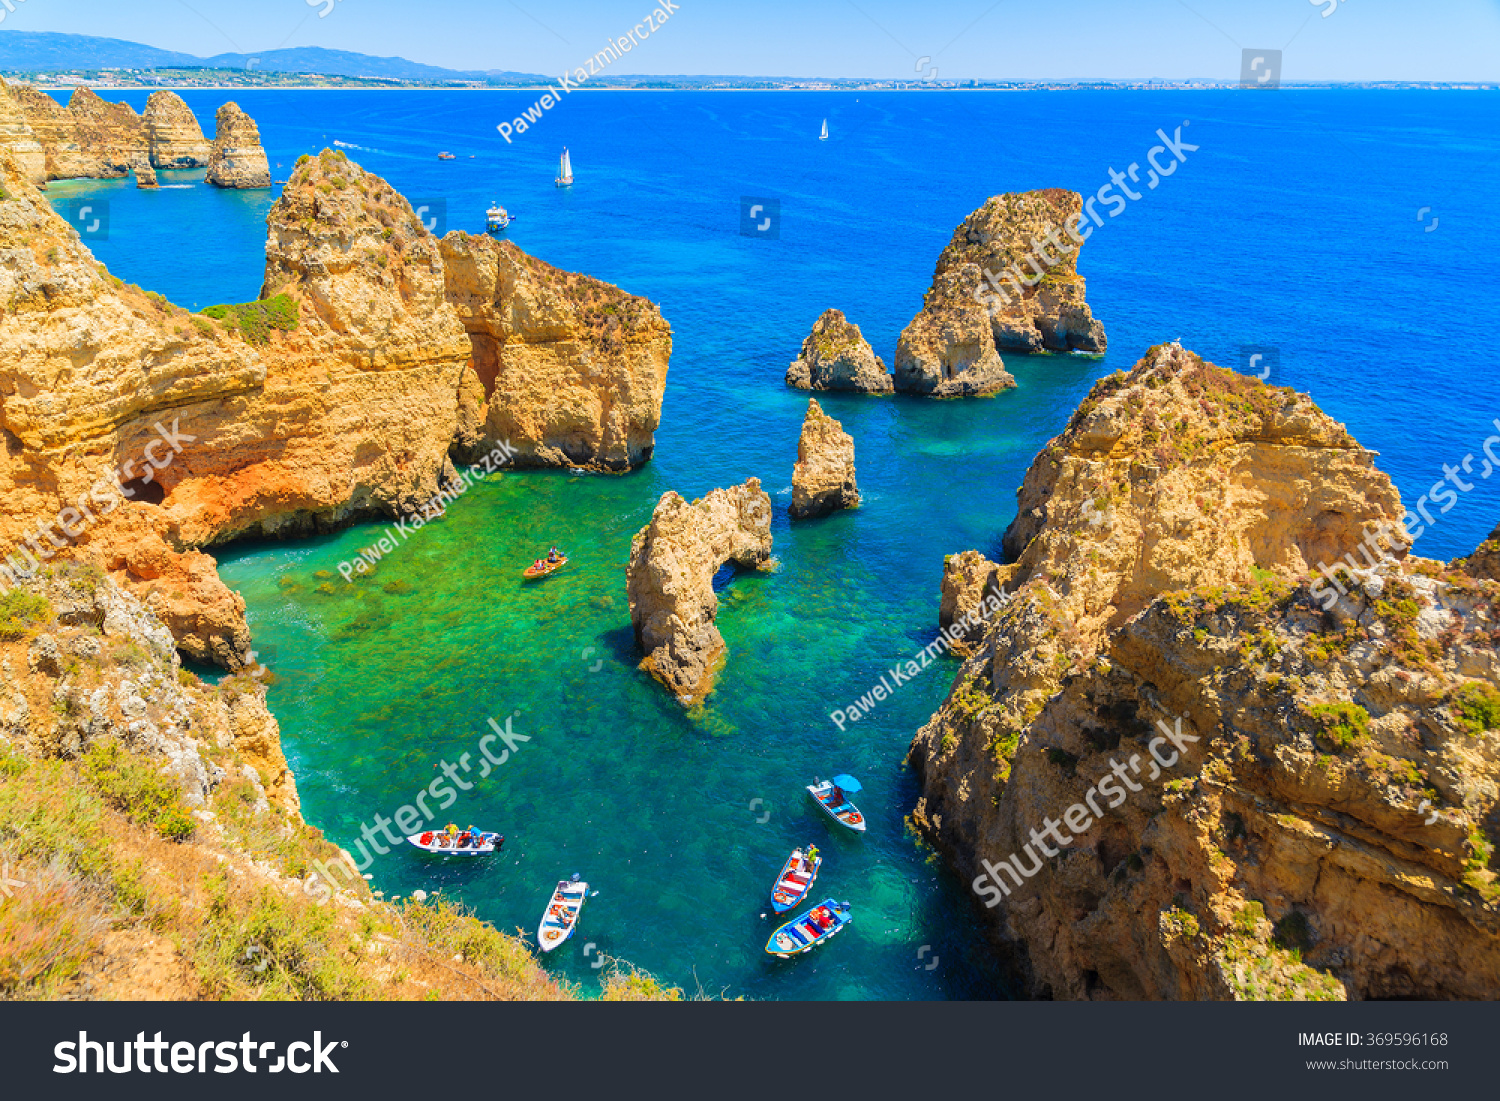 Fishing boats on turquoise sea water at Ponta da Piedade, Algarve region, Portugal #369596168